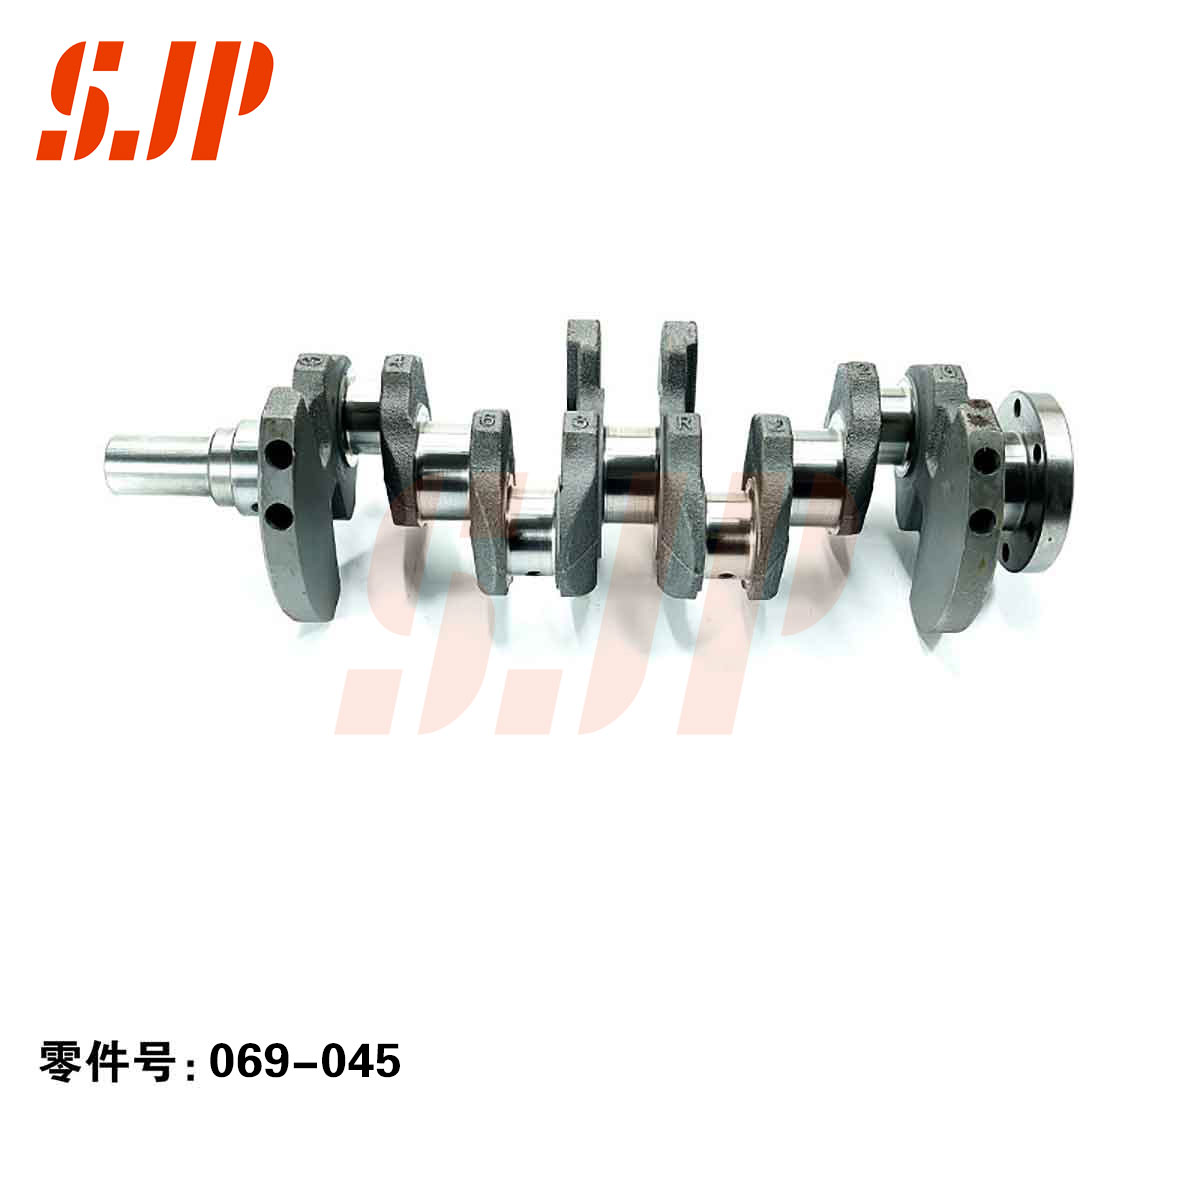 SJ-069-045 Crankshaft For DK13-08